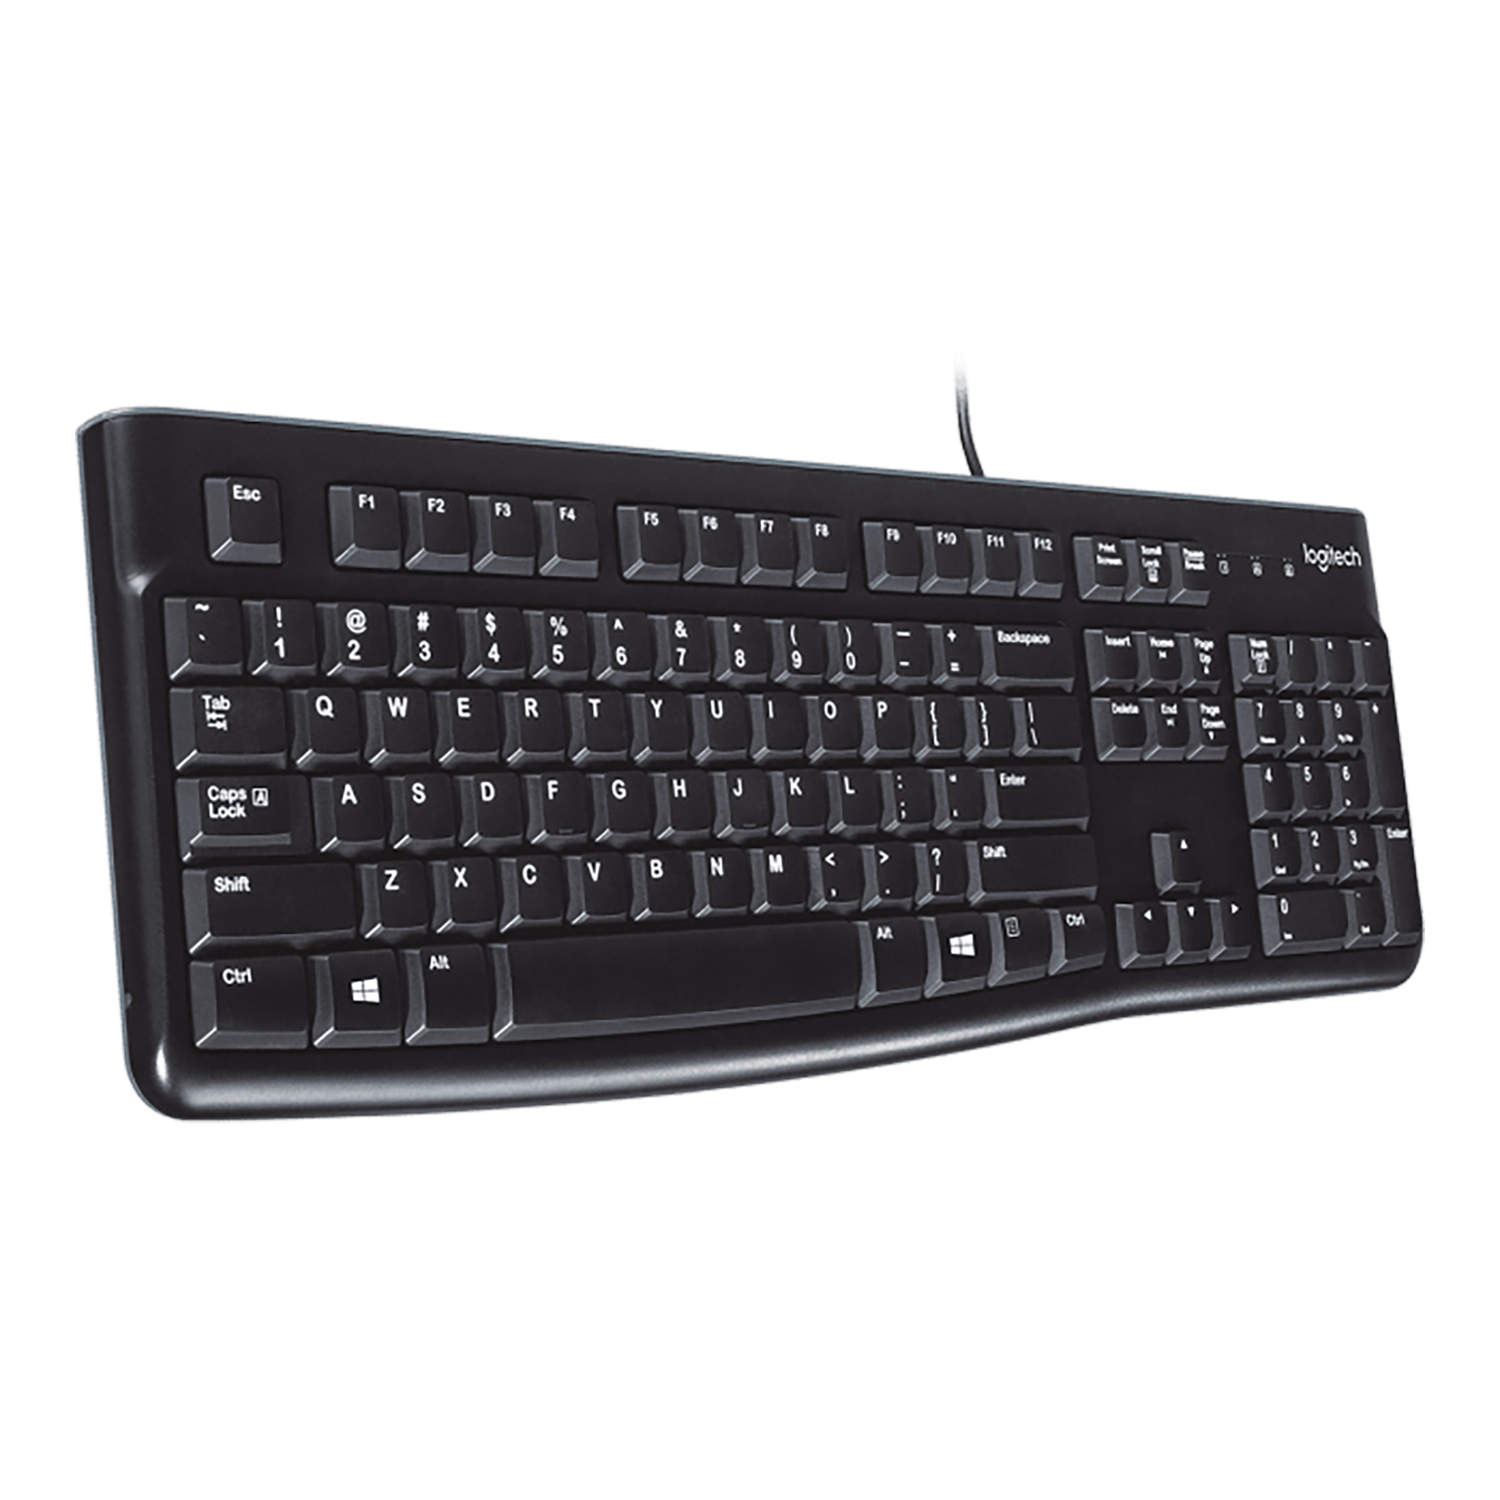 Logitech K120 USB Standard Computer Keyboard